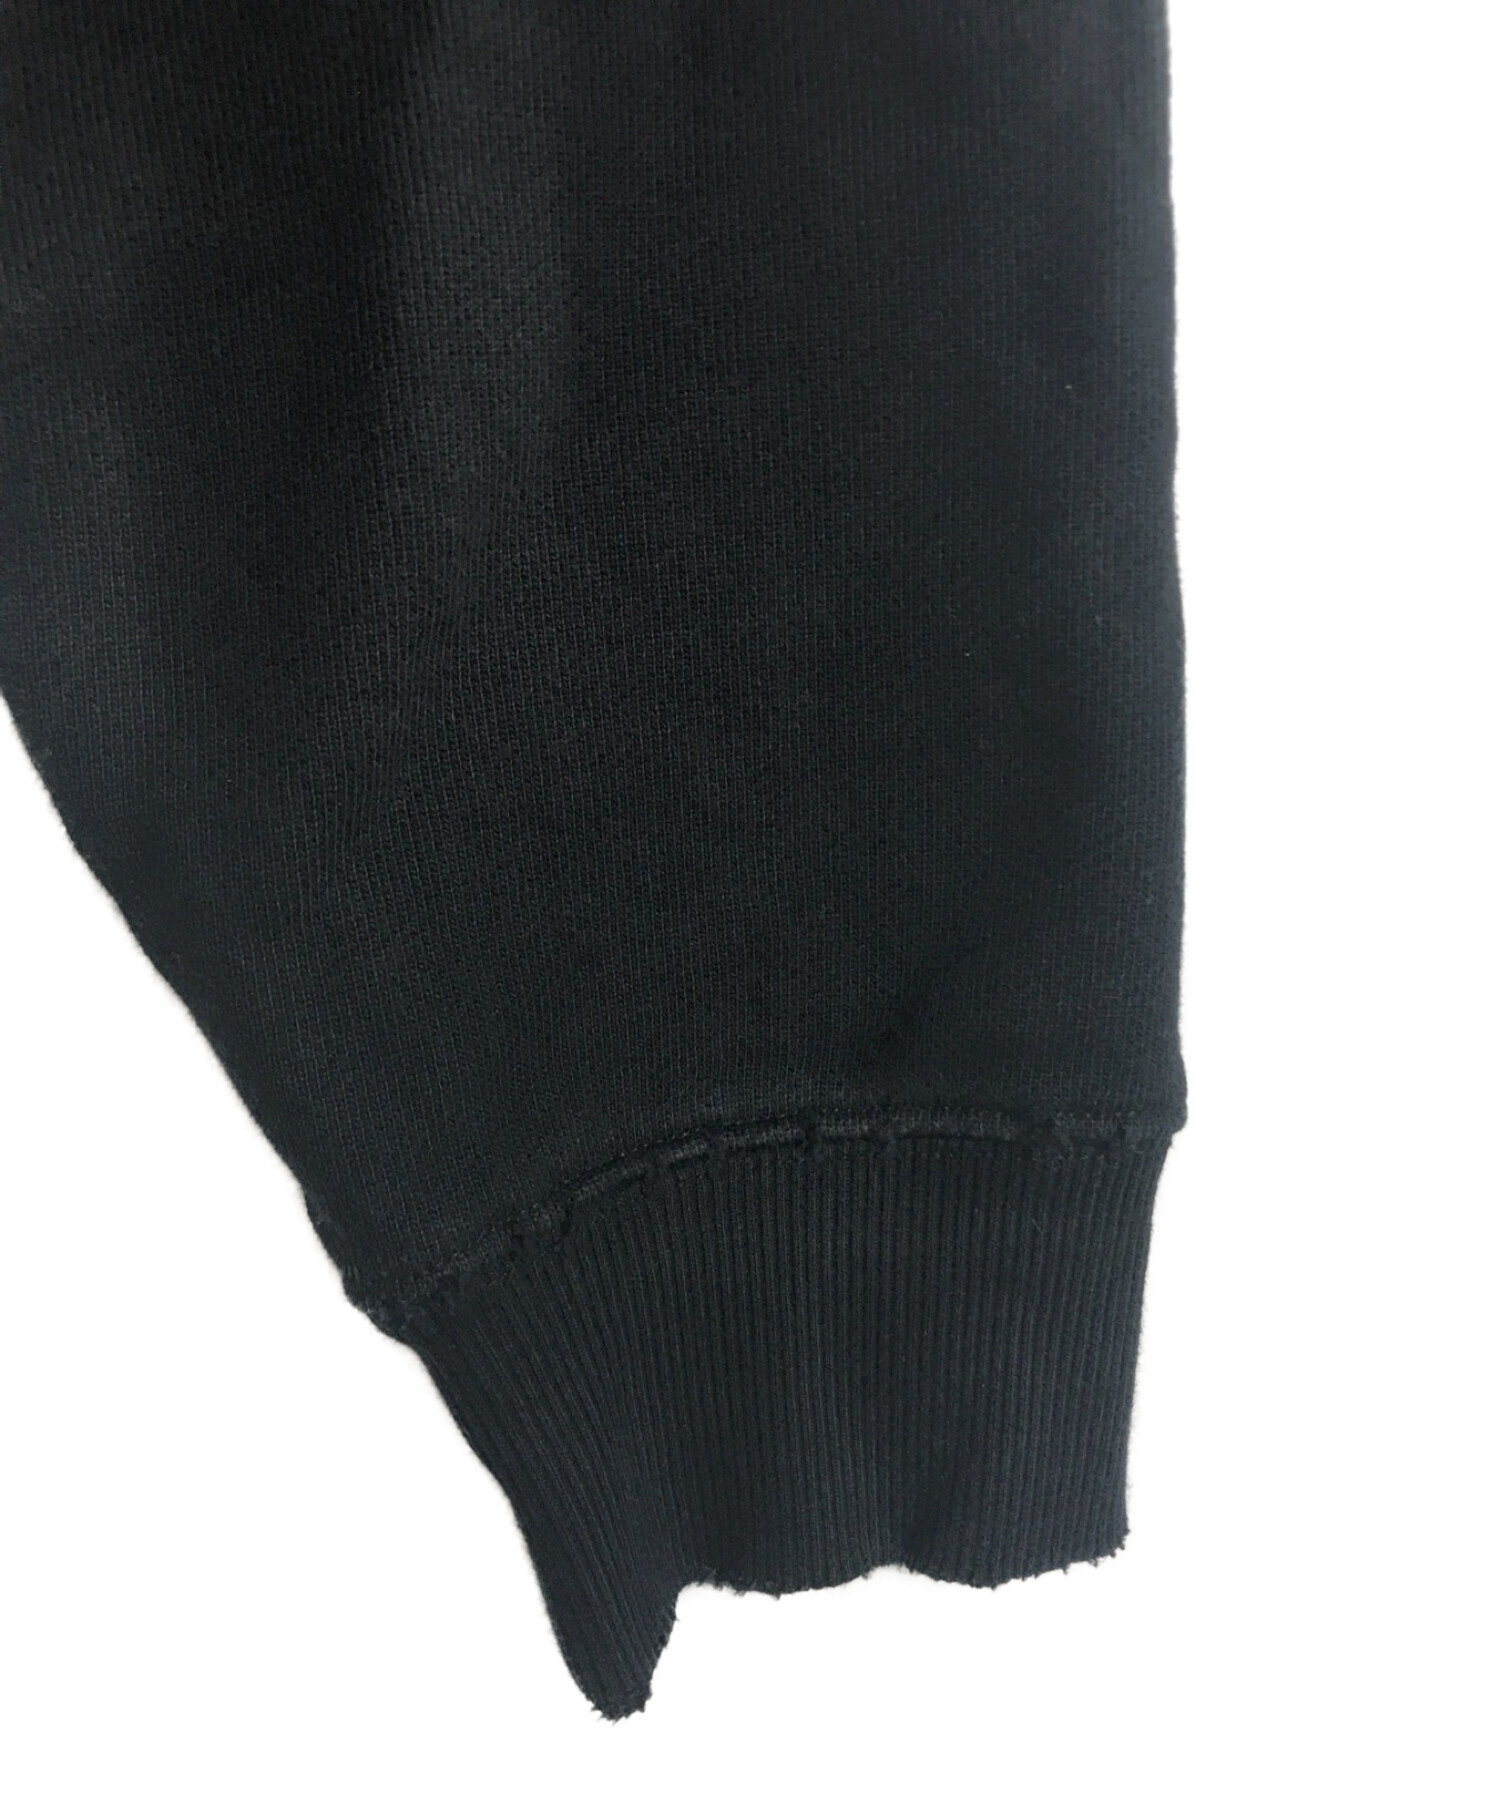 032c (ゼロスリーツーシー) オーバーサイズアンセムスウェットシャツ ブラック サイズ:L